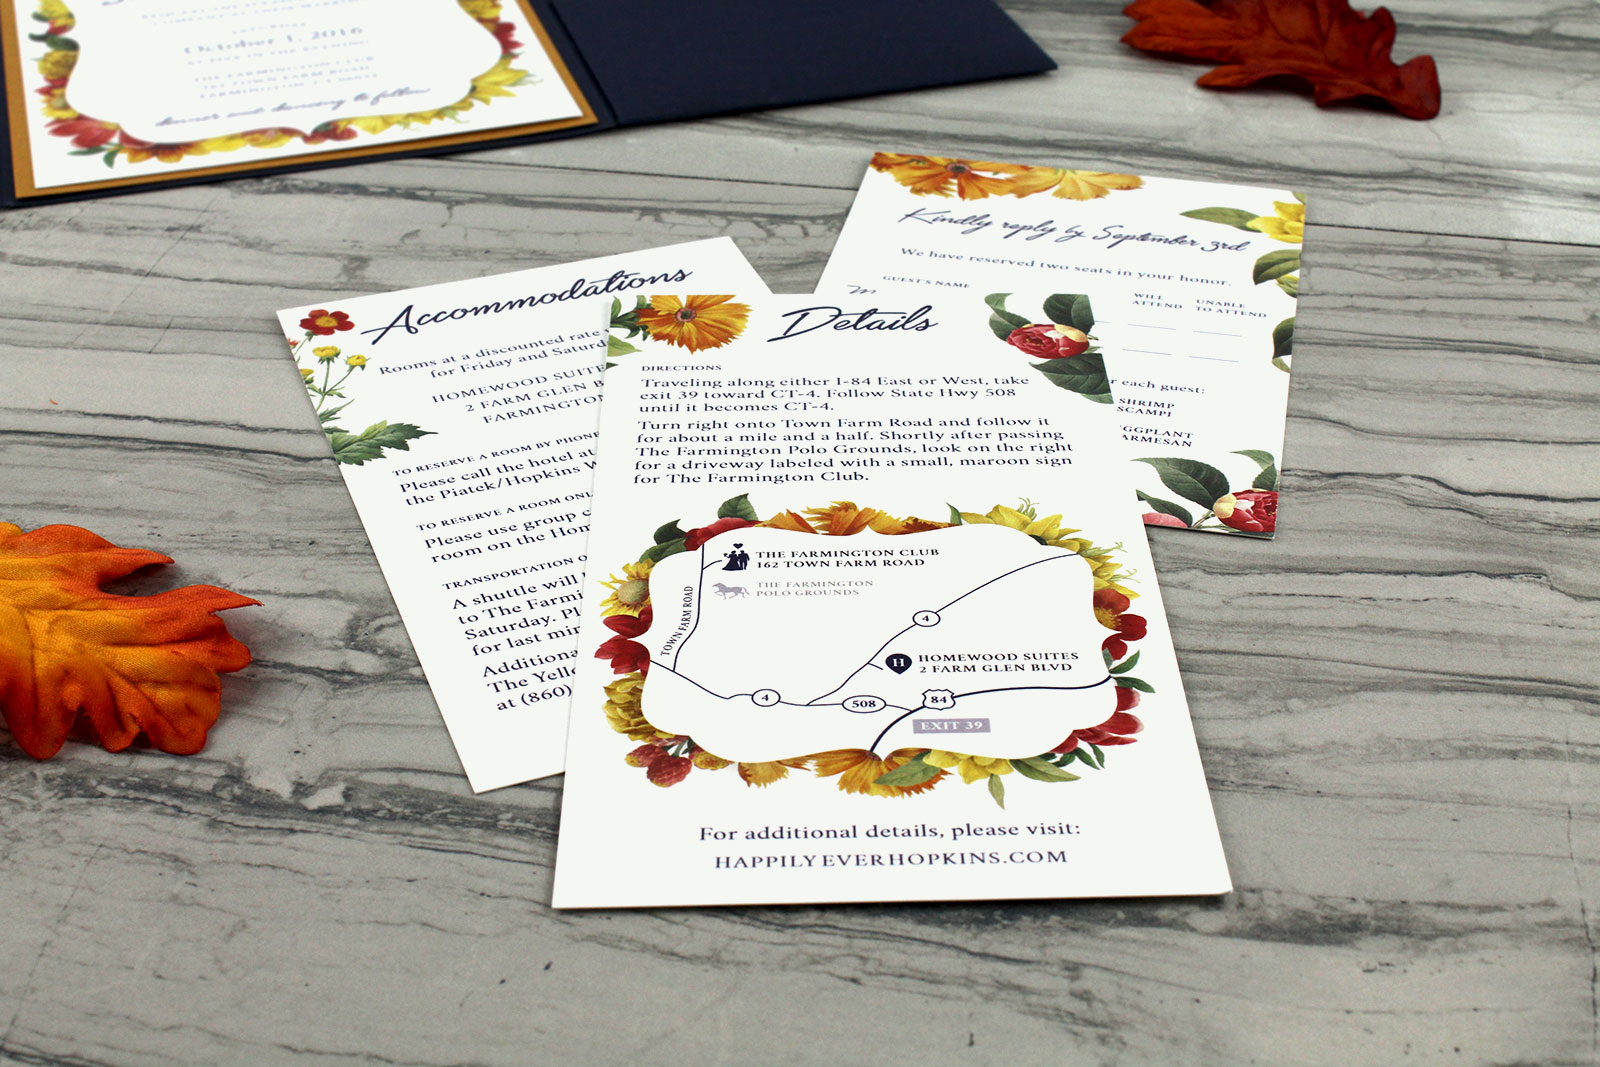 Kristina and Samuel's wedding invitations